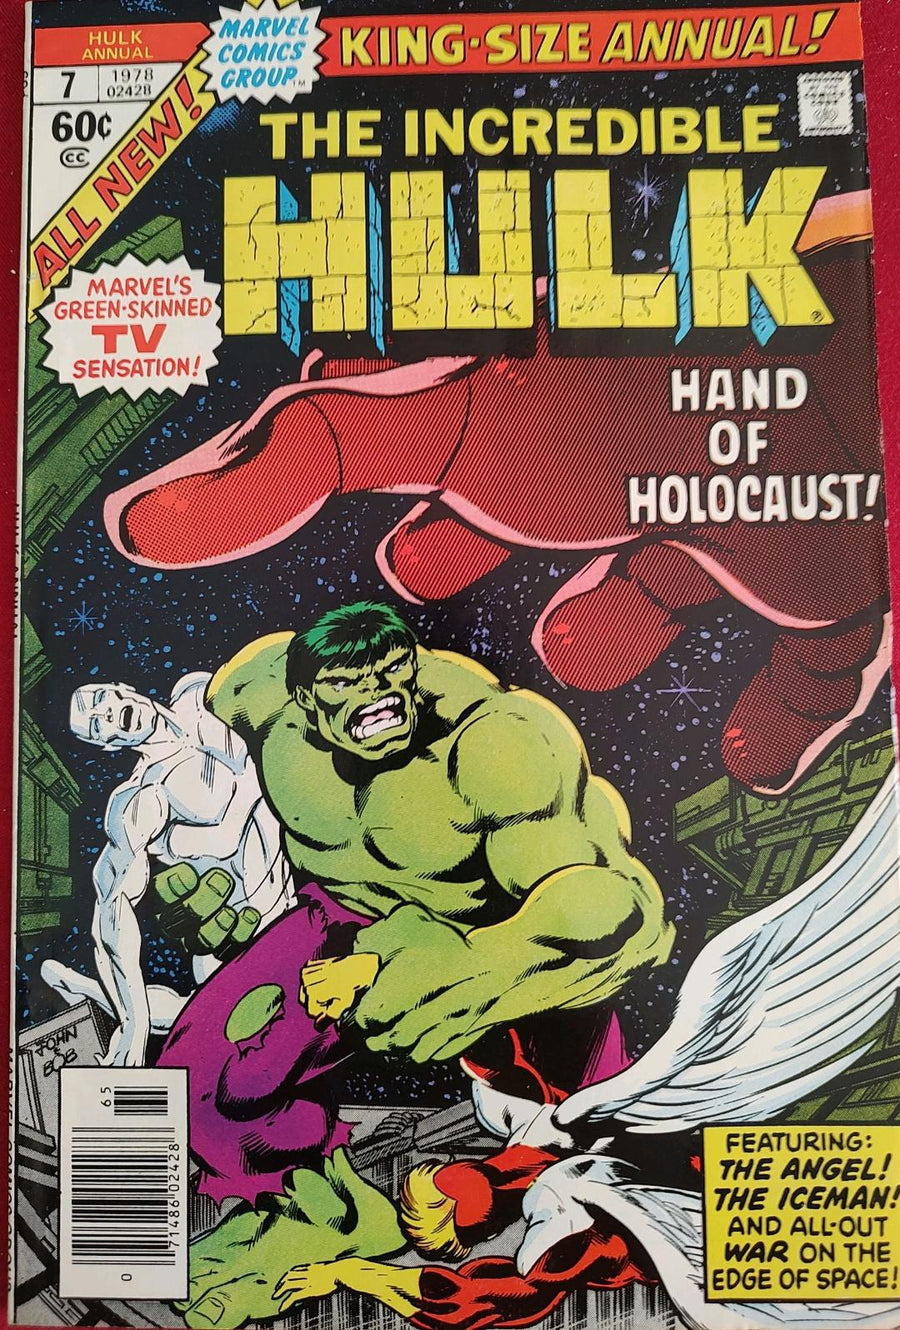 The Incredible Hulk Annual #7 Comic Book Cover